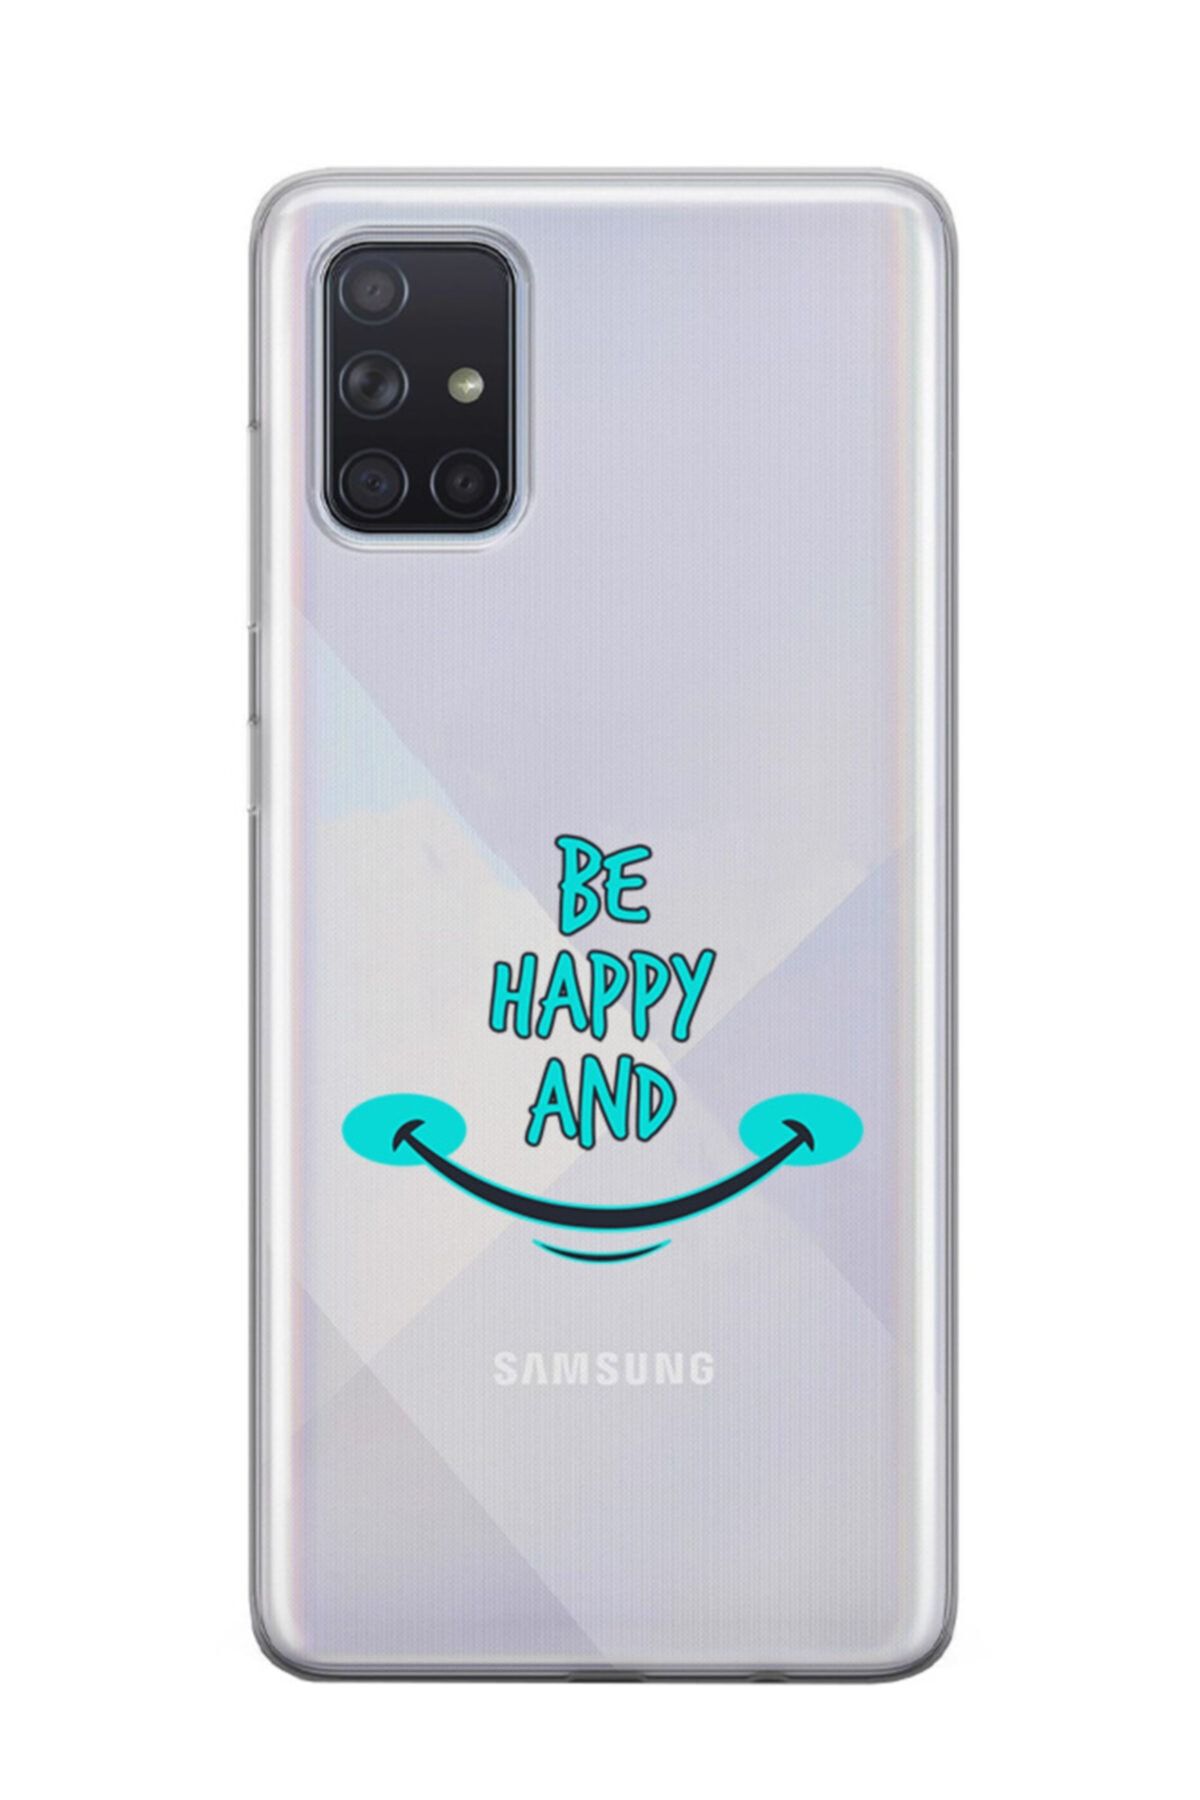 Dafhi Aksesuar Dafhi Samsung Galaxy A71 Be Happy And Telefon Kılıfı